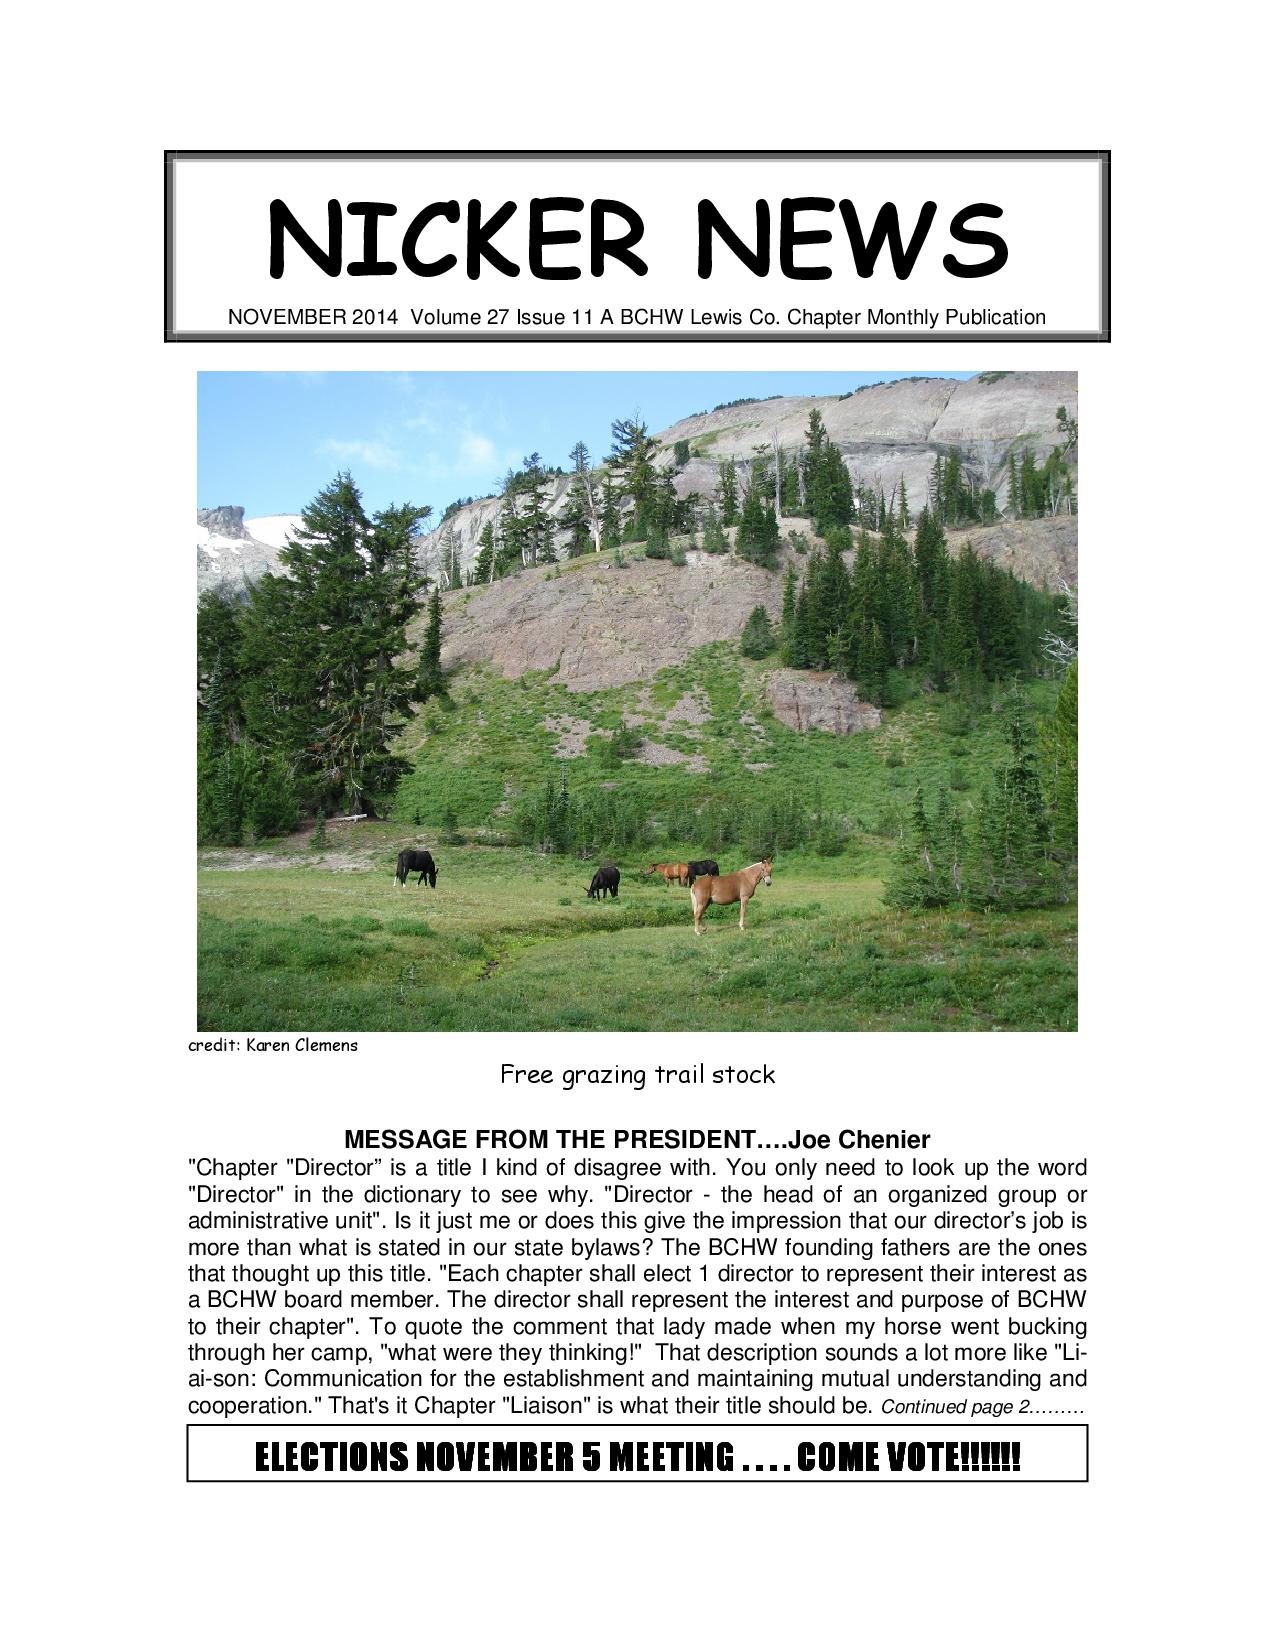 NICKER NEWS NOV 2014-001.jpg